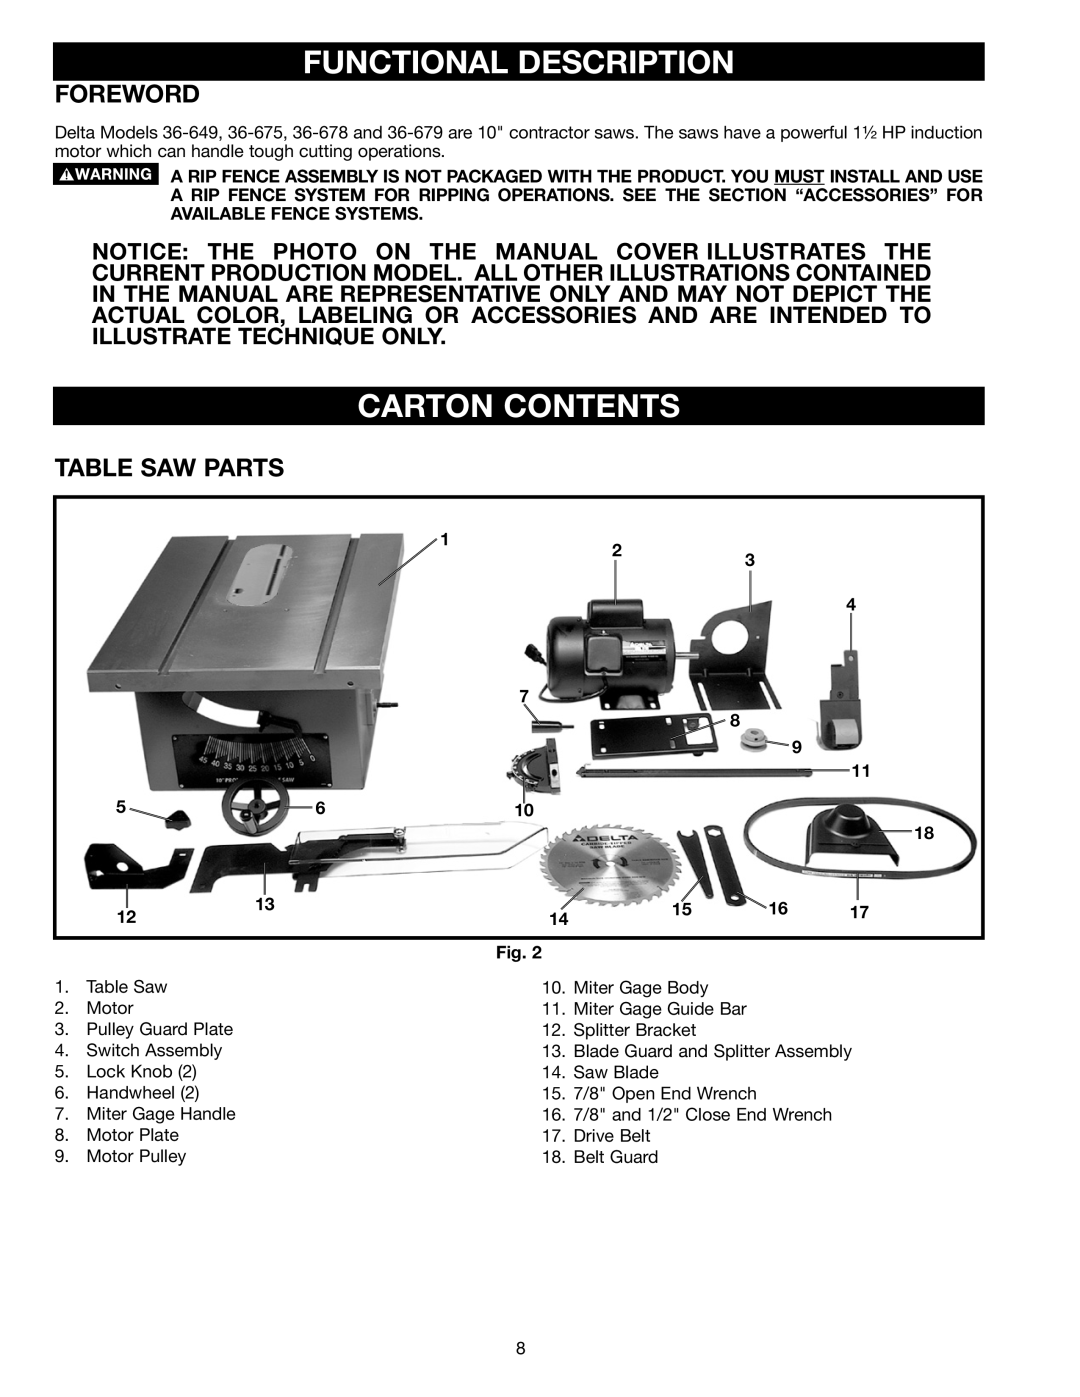 Porter-Cable 36-649, 36-678, 36-675, 36-679 Functional Description, Carton Contents, Foreword, Table Saw Parts 